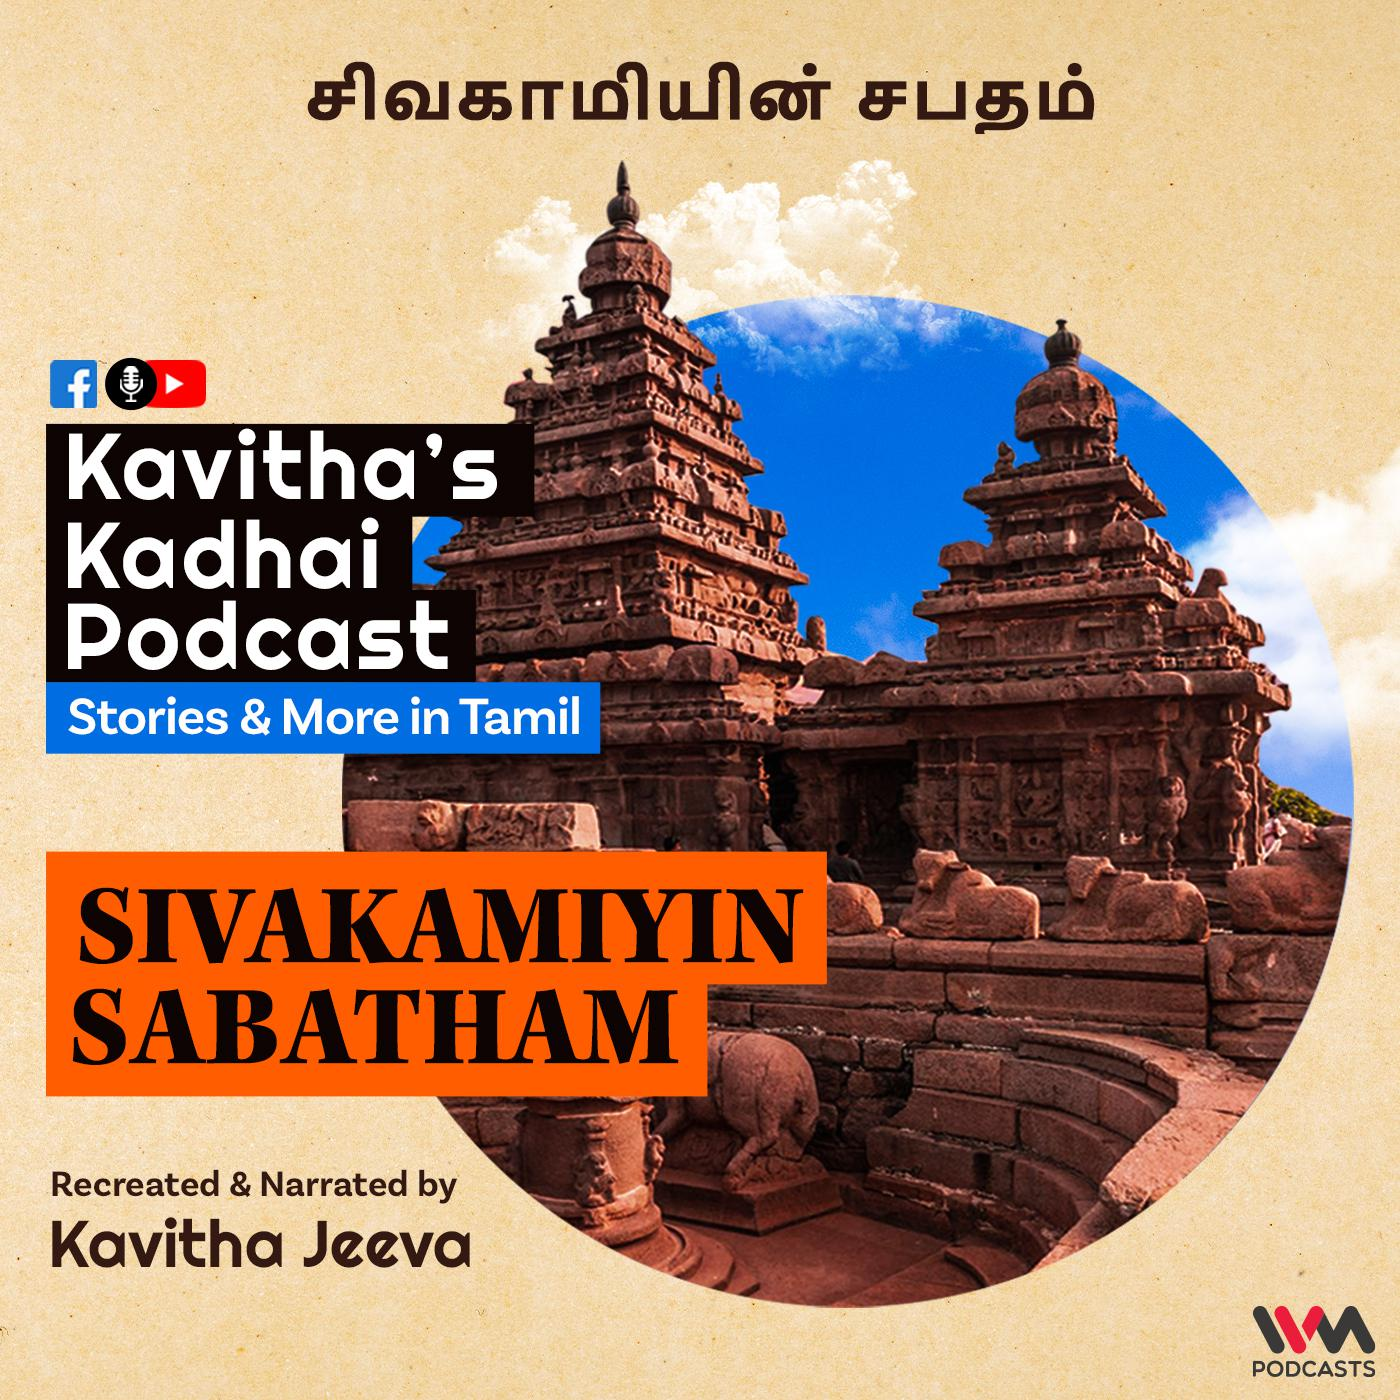 KadhaiPodcast's Sivakamiyin Sabatham with Kavitha Jeeva - Episode #144